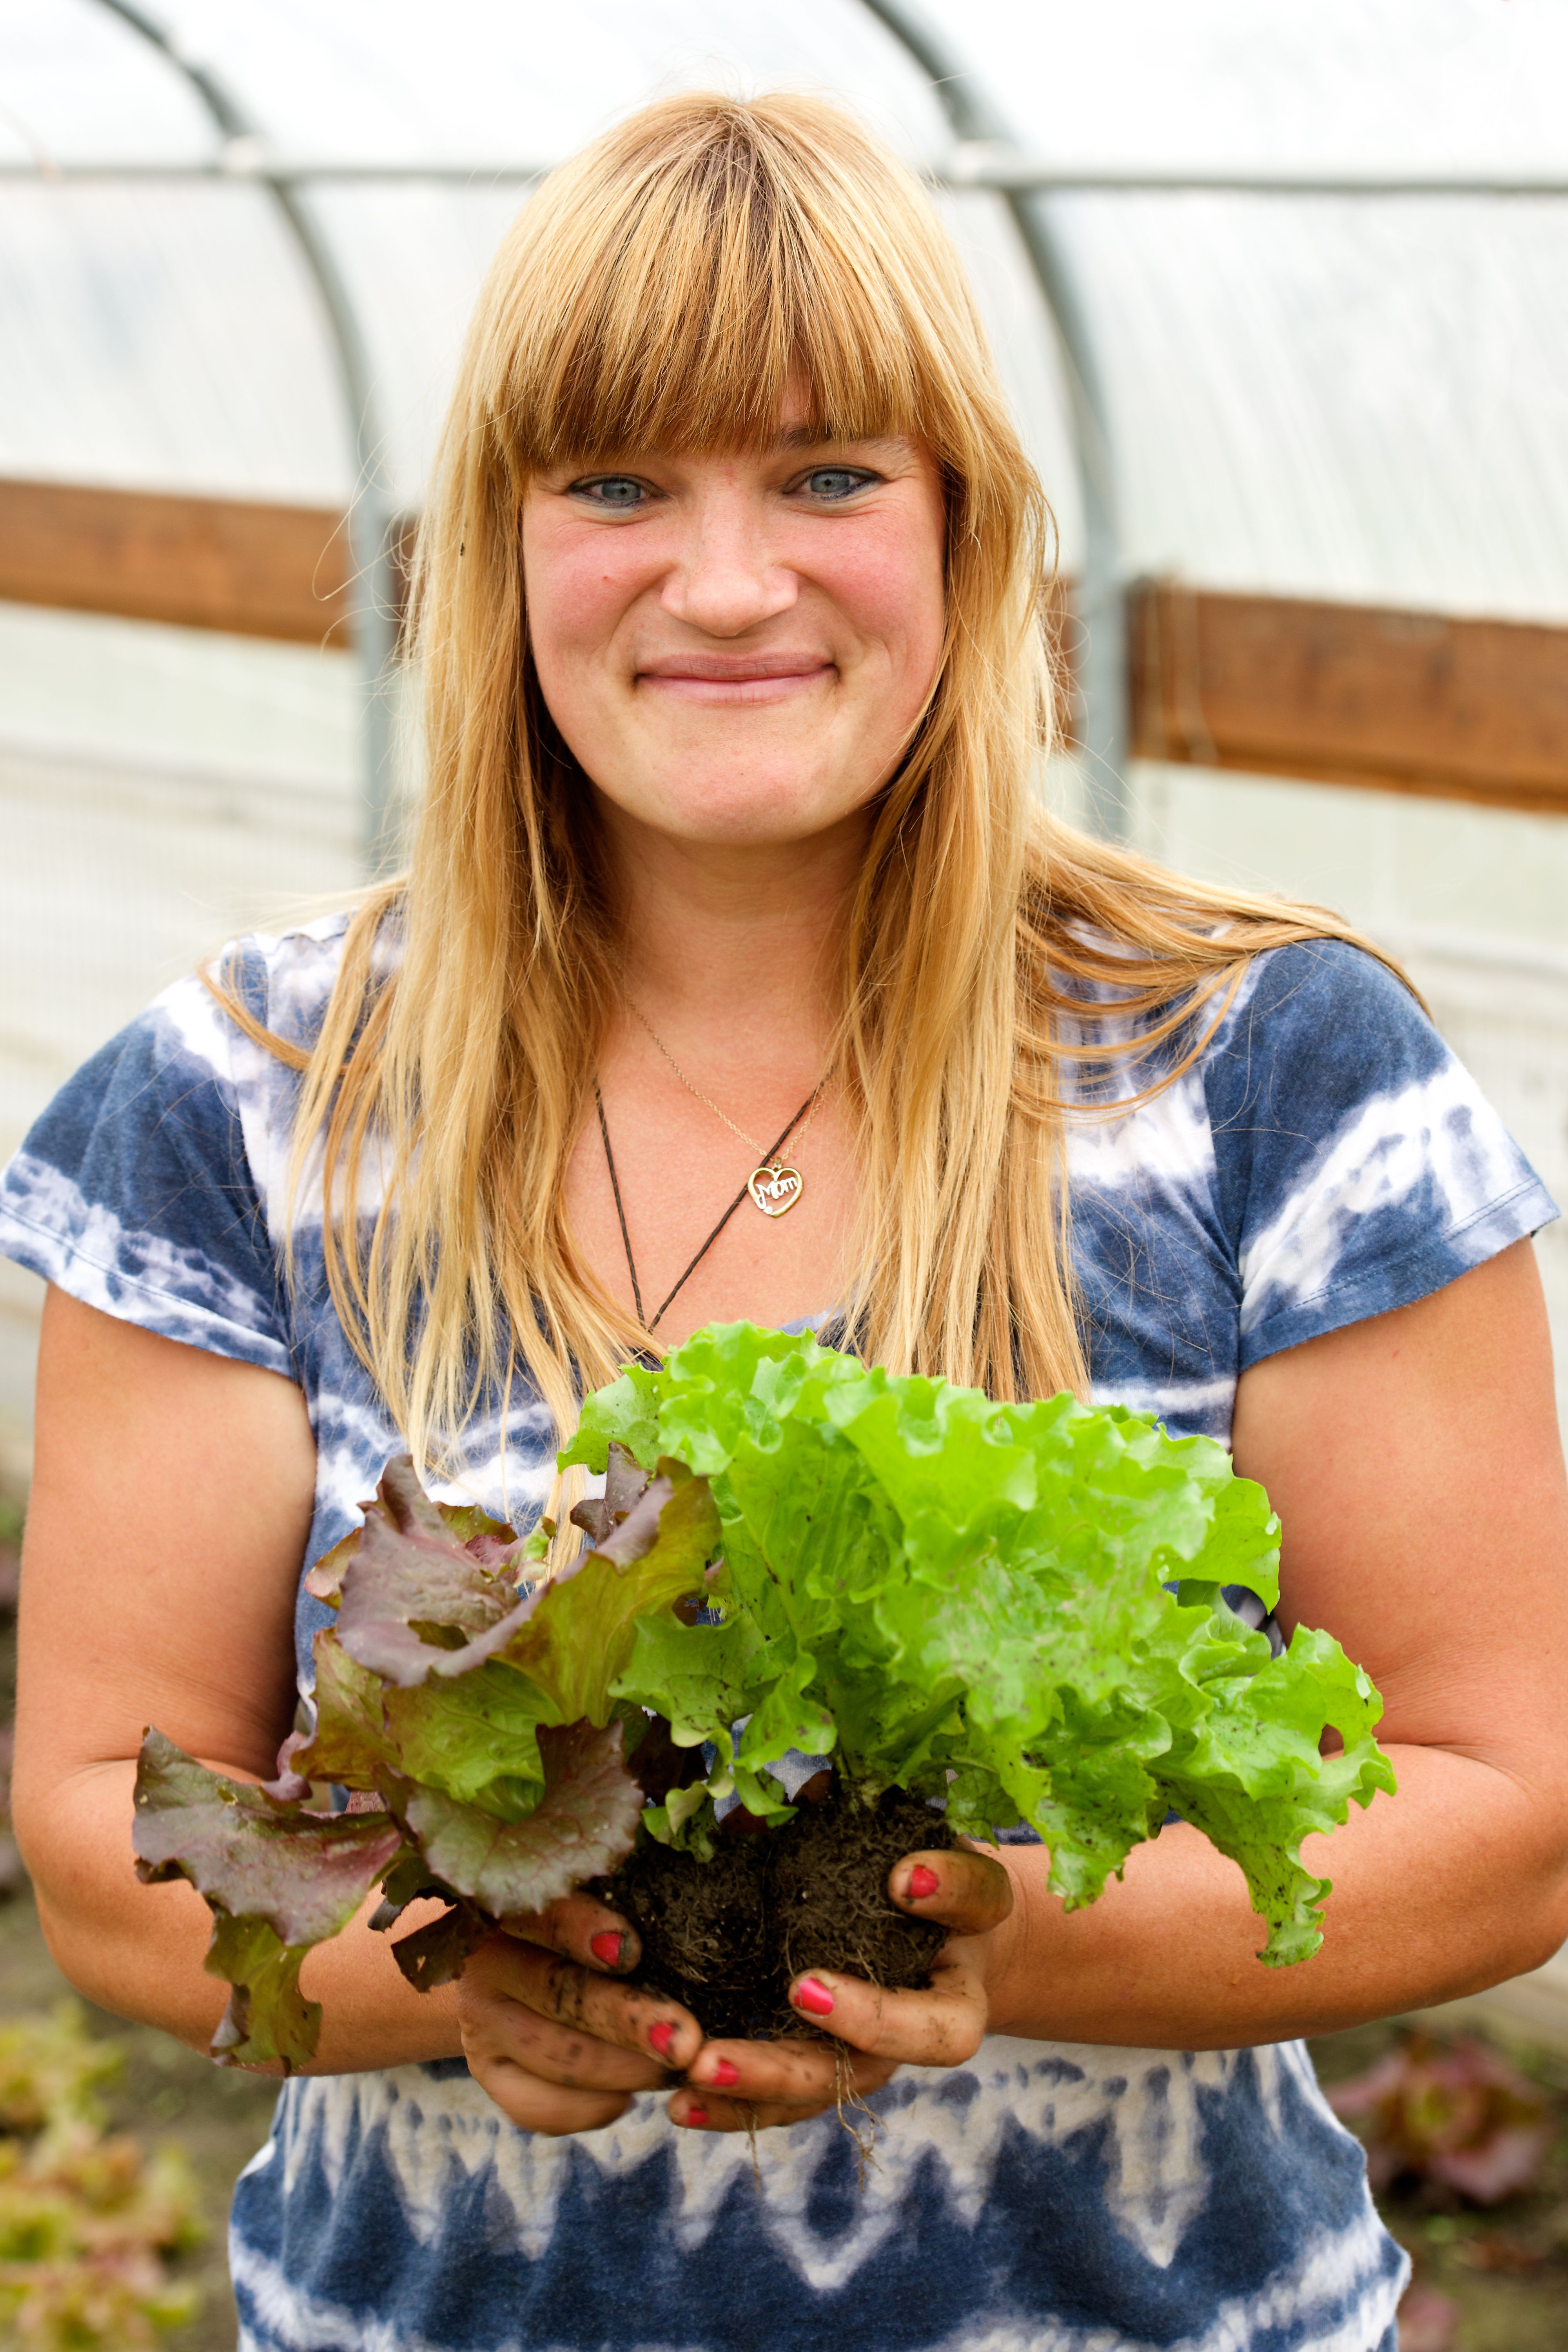 Blonde woman wearing blue tie die holds head of lettuce in greenhouse in lifestyle portrait